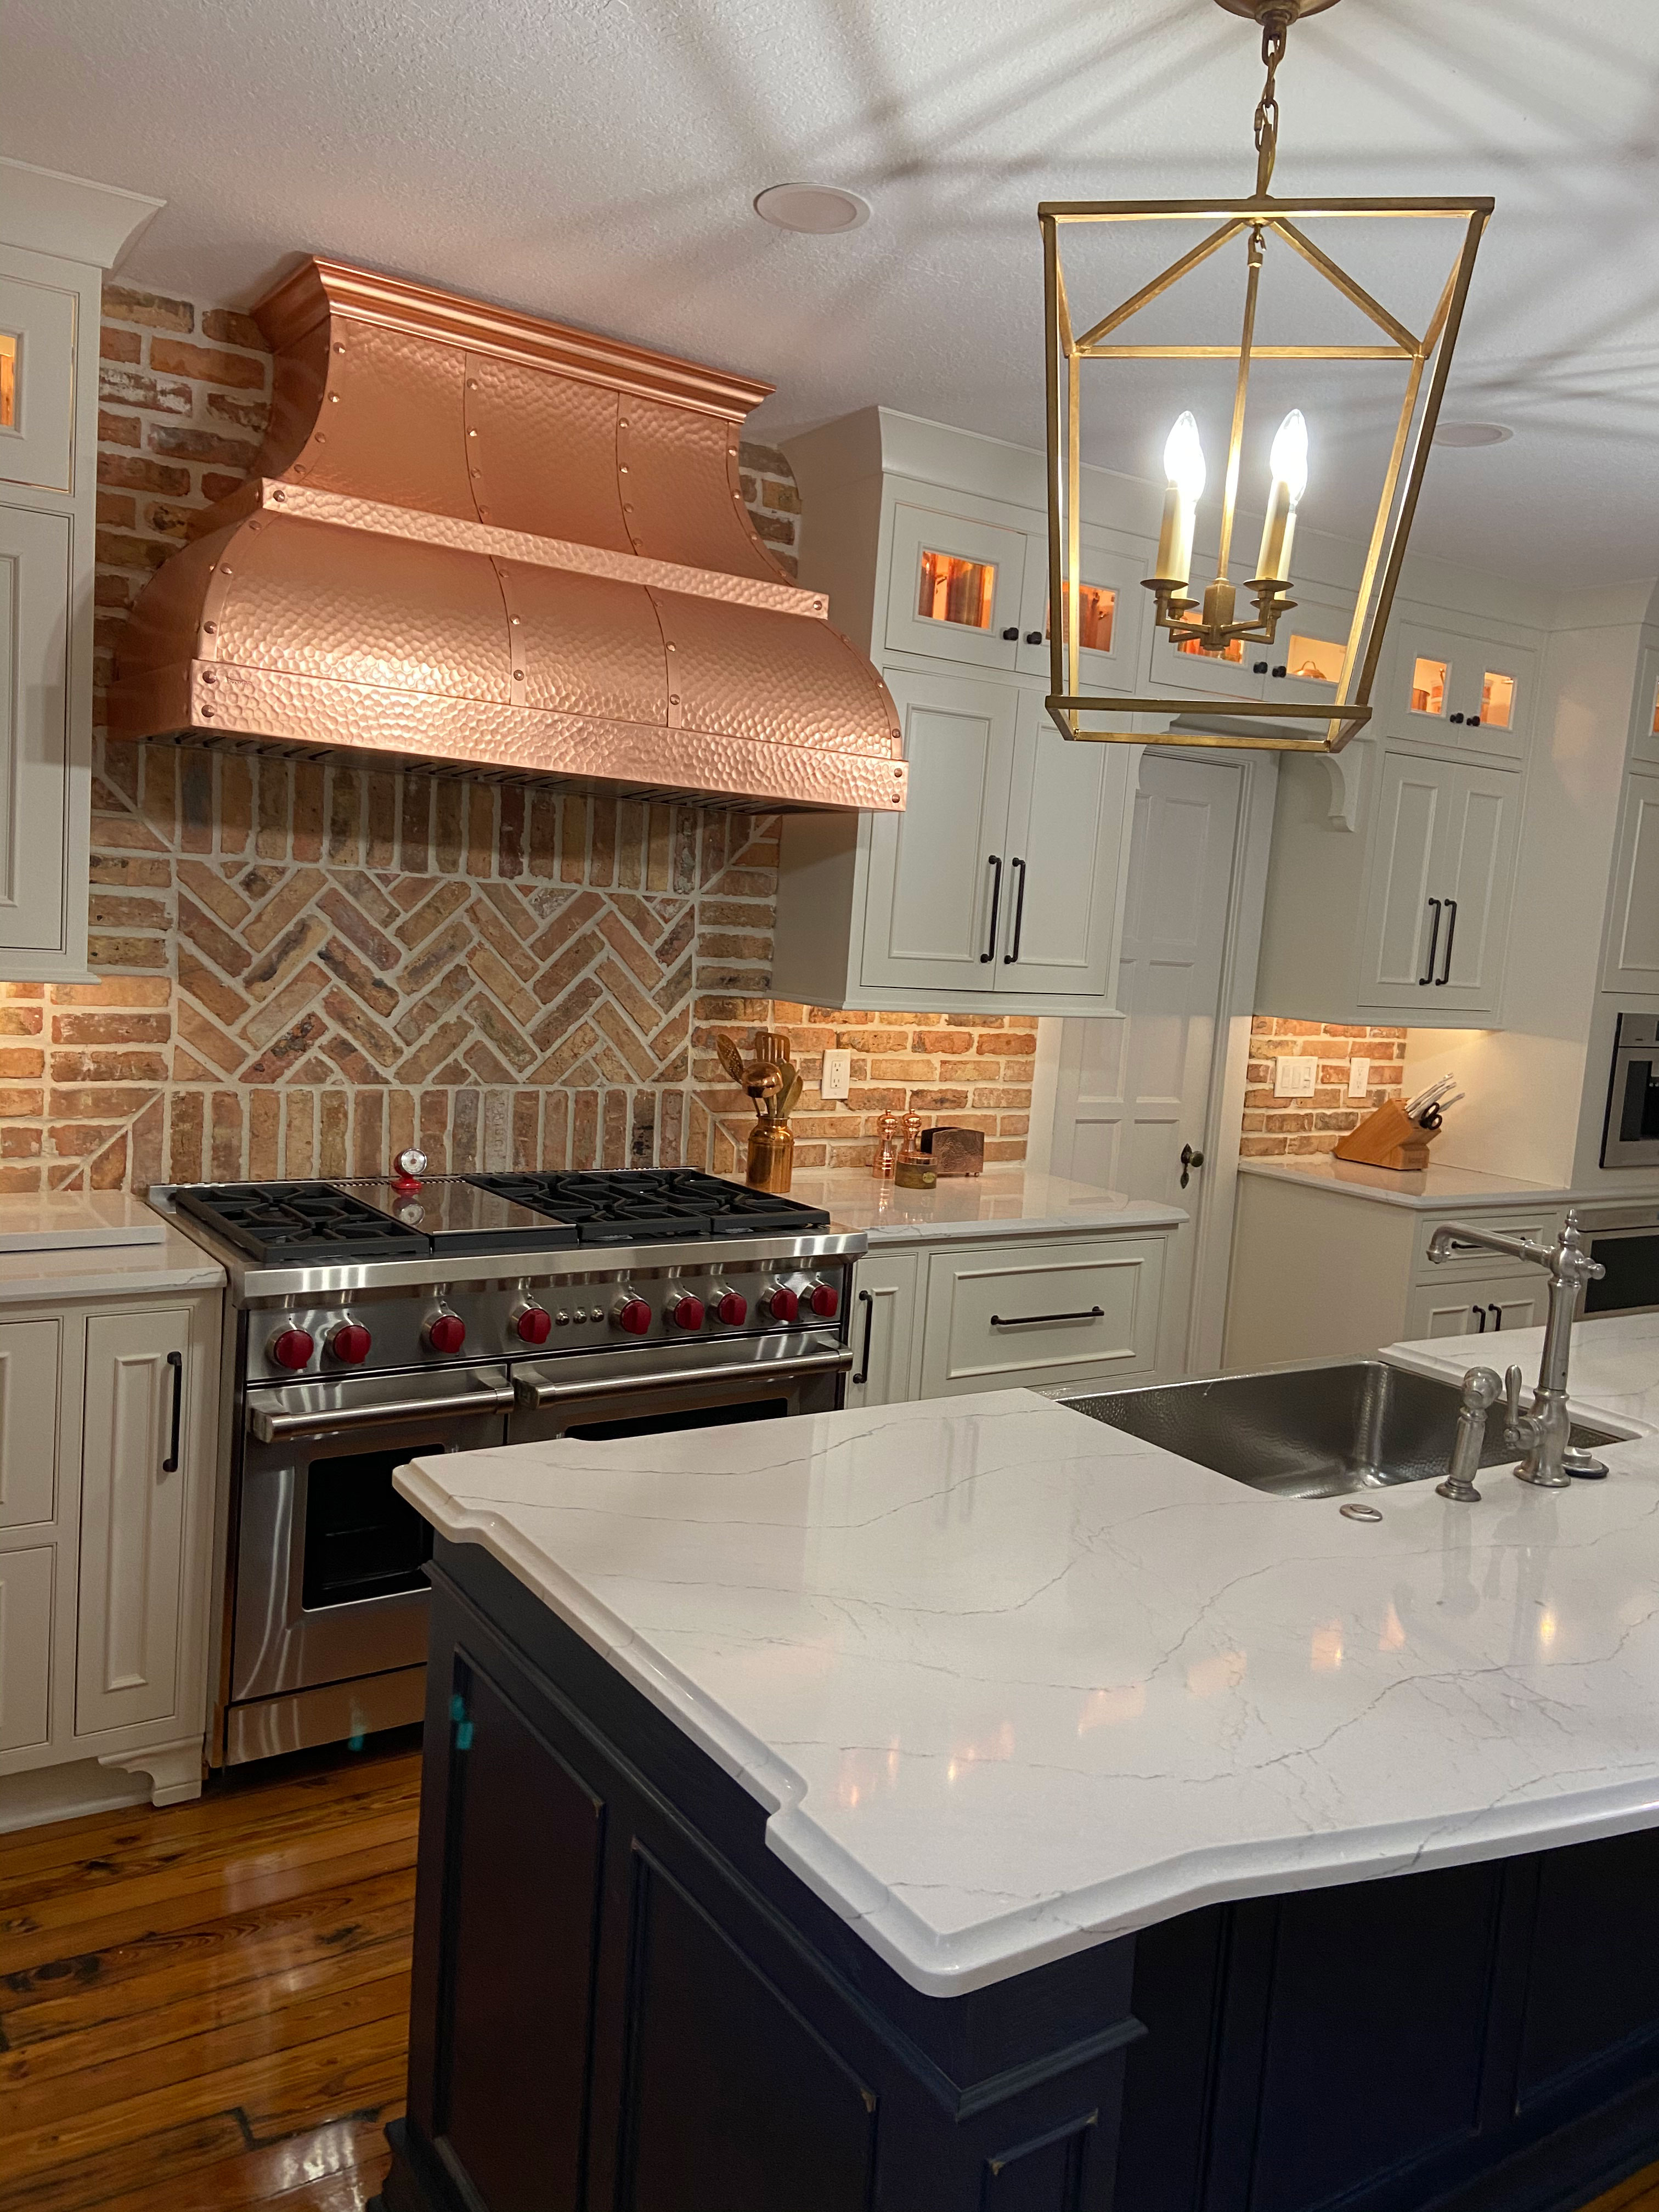 Incorporating white kitchen cabinets with copper range hood, marble kitchen countertops brick backsplash